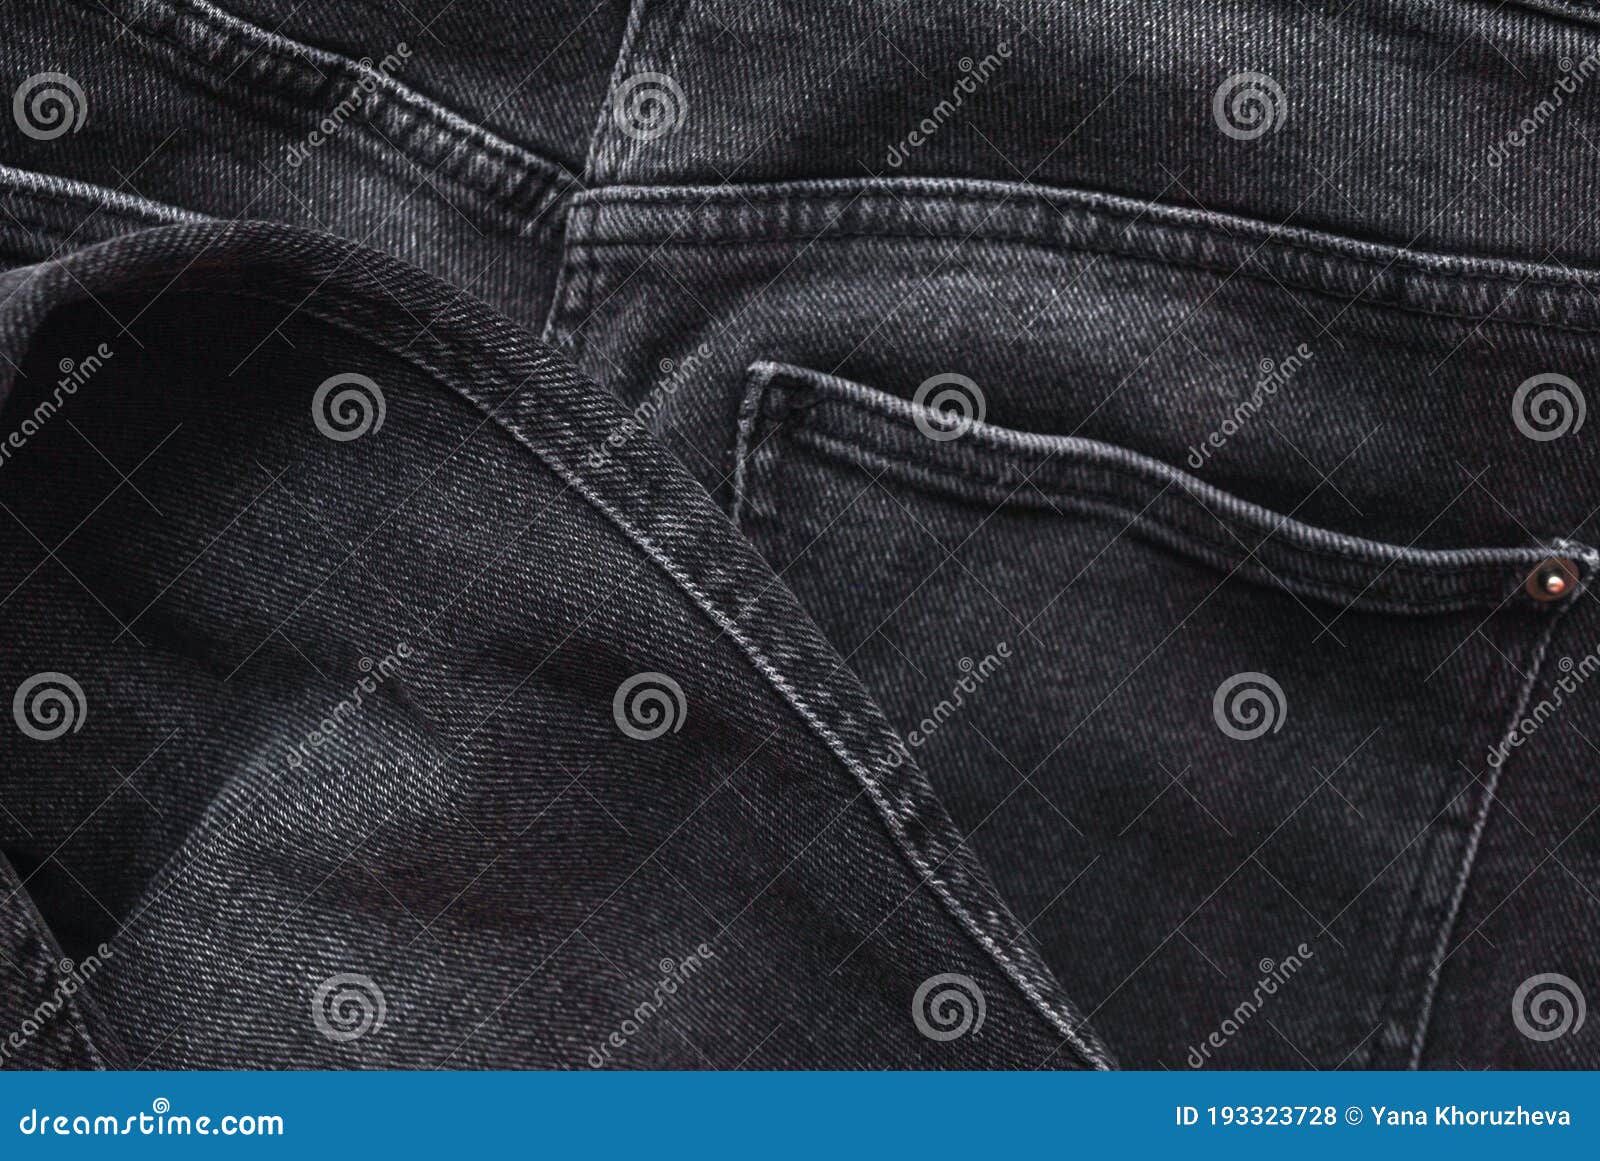 Denim. Jeans Background. Denim Jeans Texture or Denim Jeans Background ...